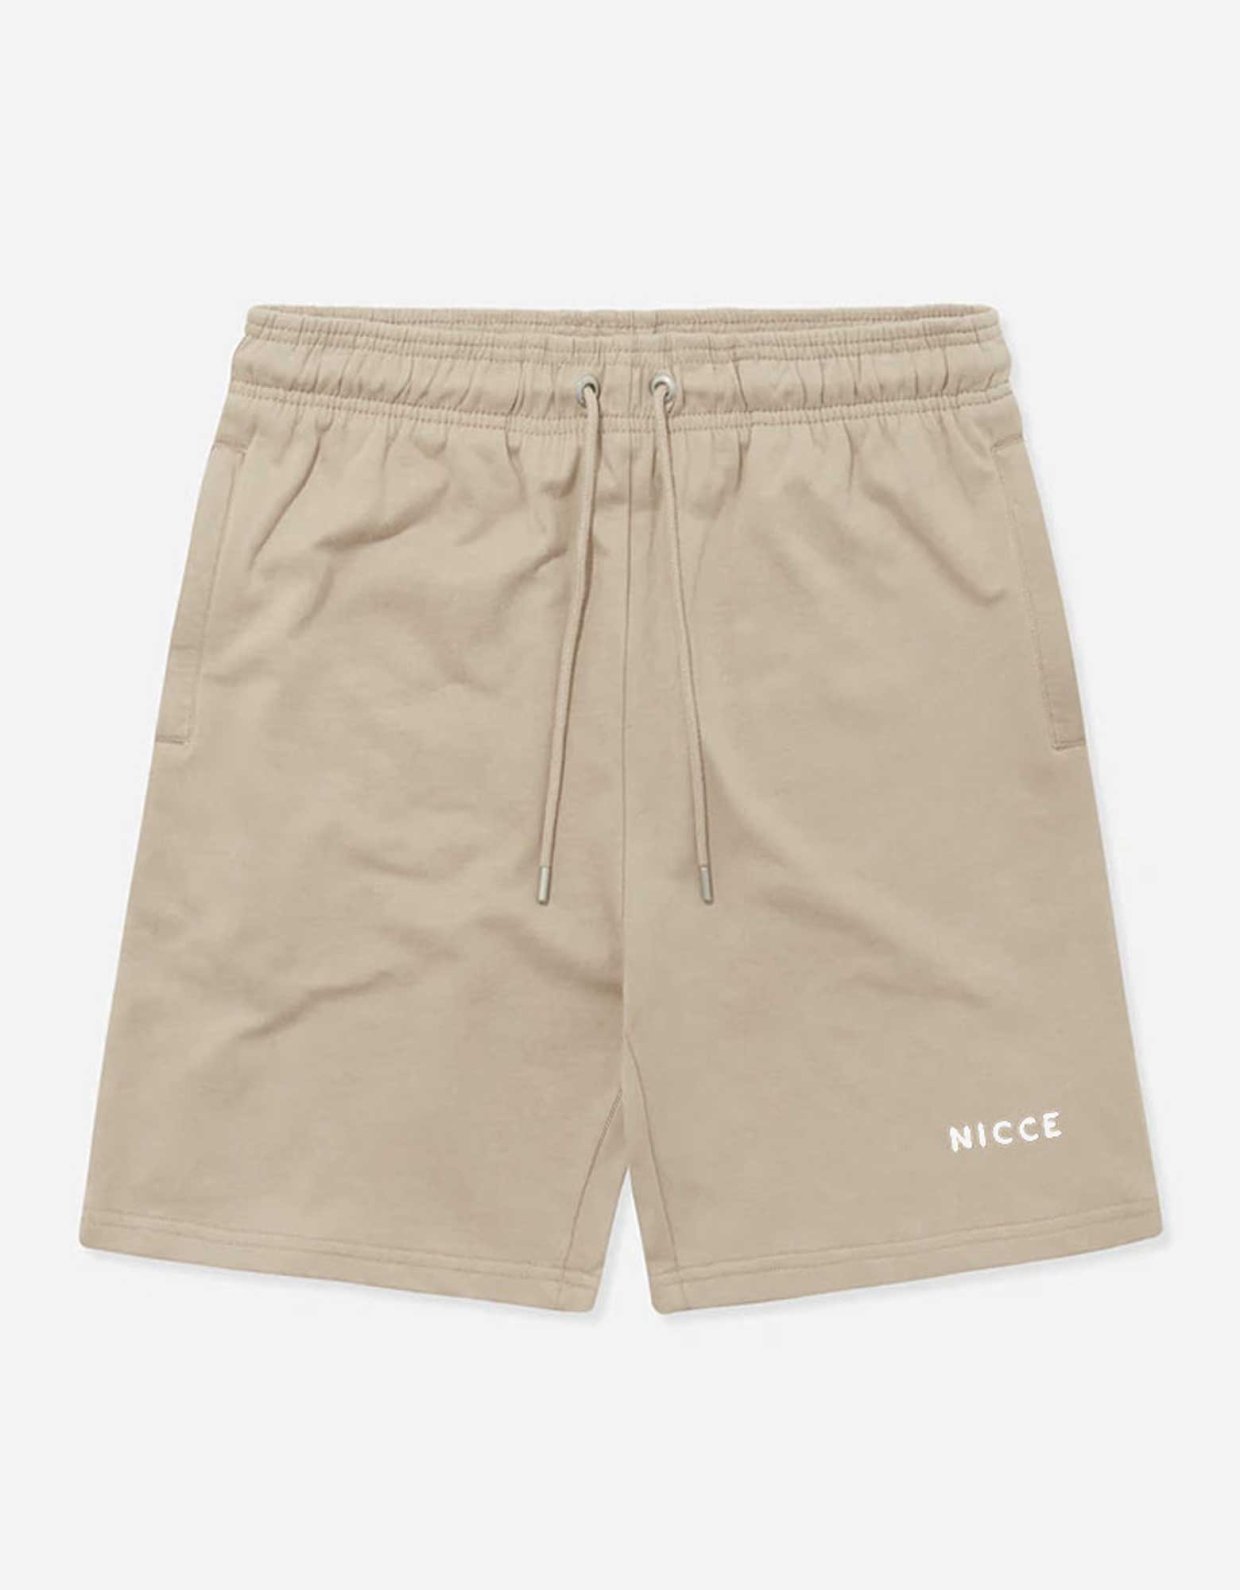 Nicce Steel jog shorts stone